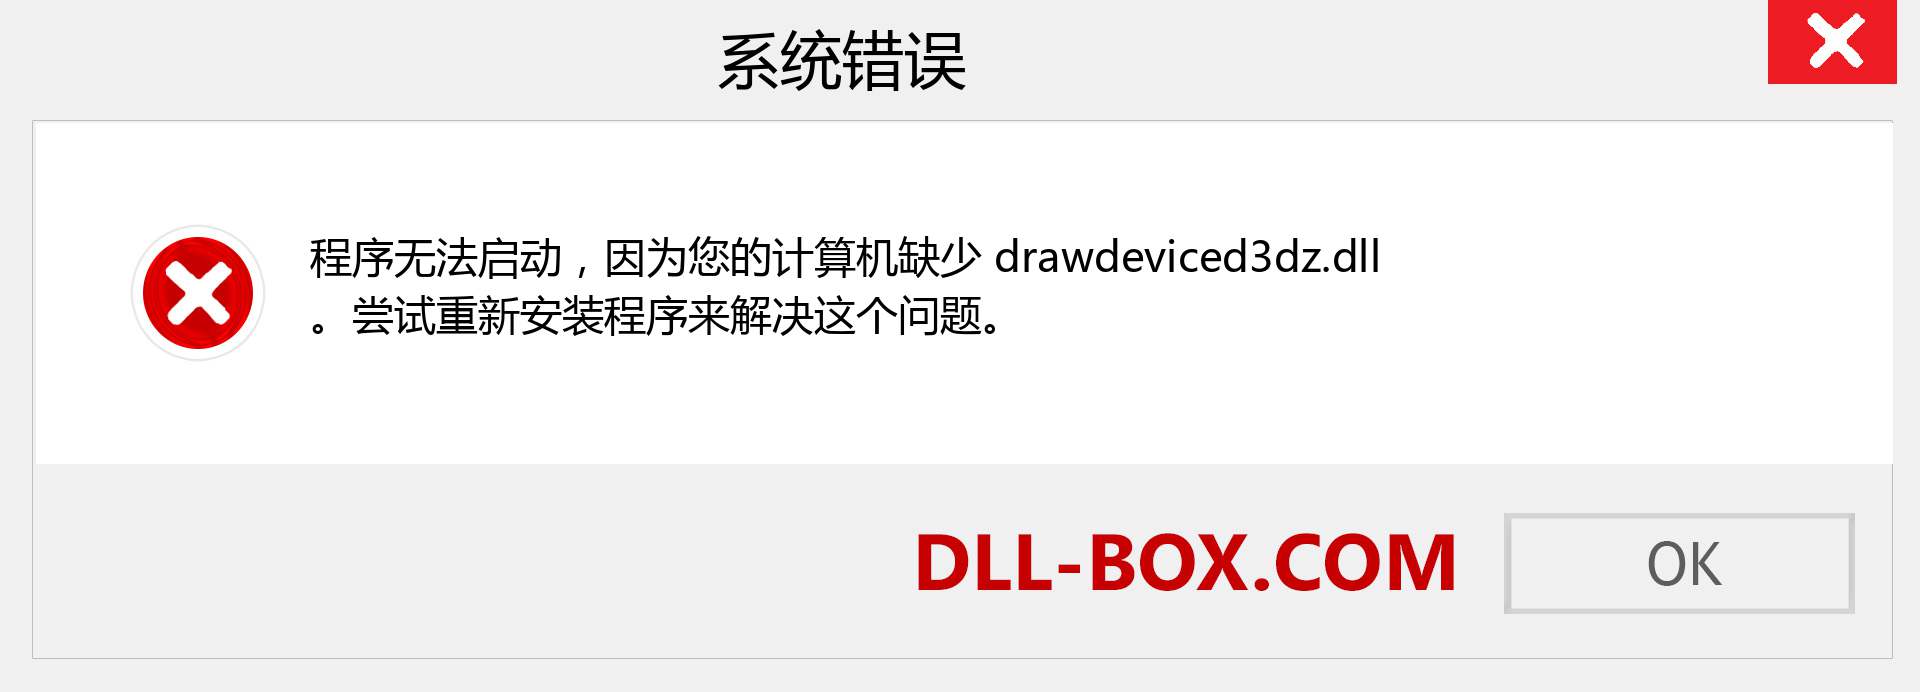 drawdeviced3dz.dll 文件丢失？。 适用于 Windows 7、8、10 的下载 - 修复 Windows、照片、图像上的 drawdeviced3dz dll 丢失错误